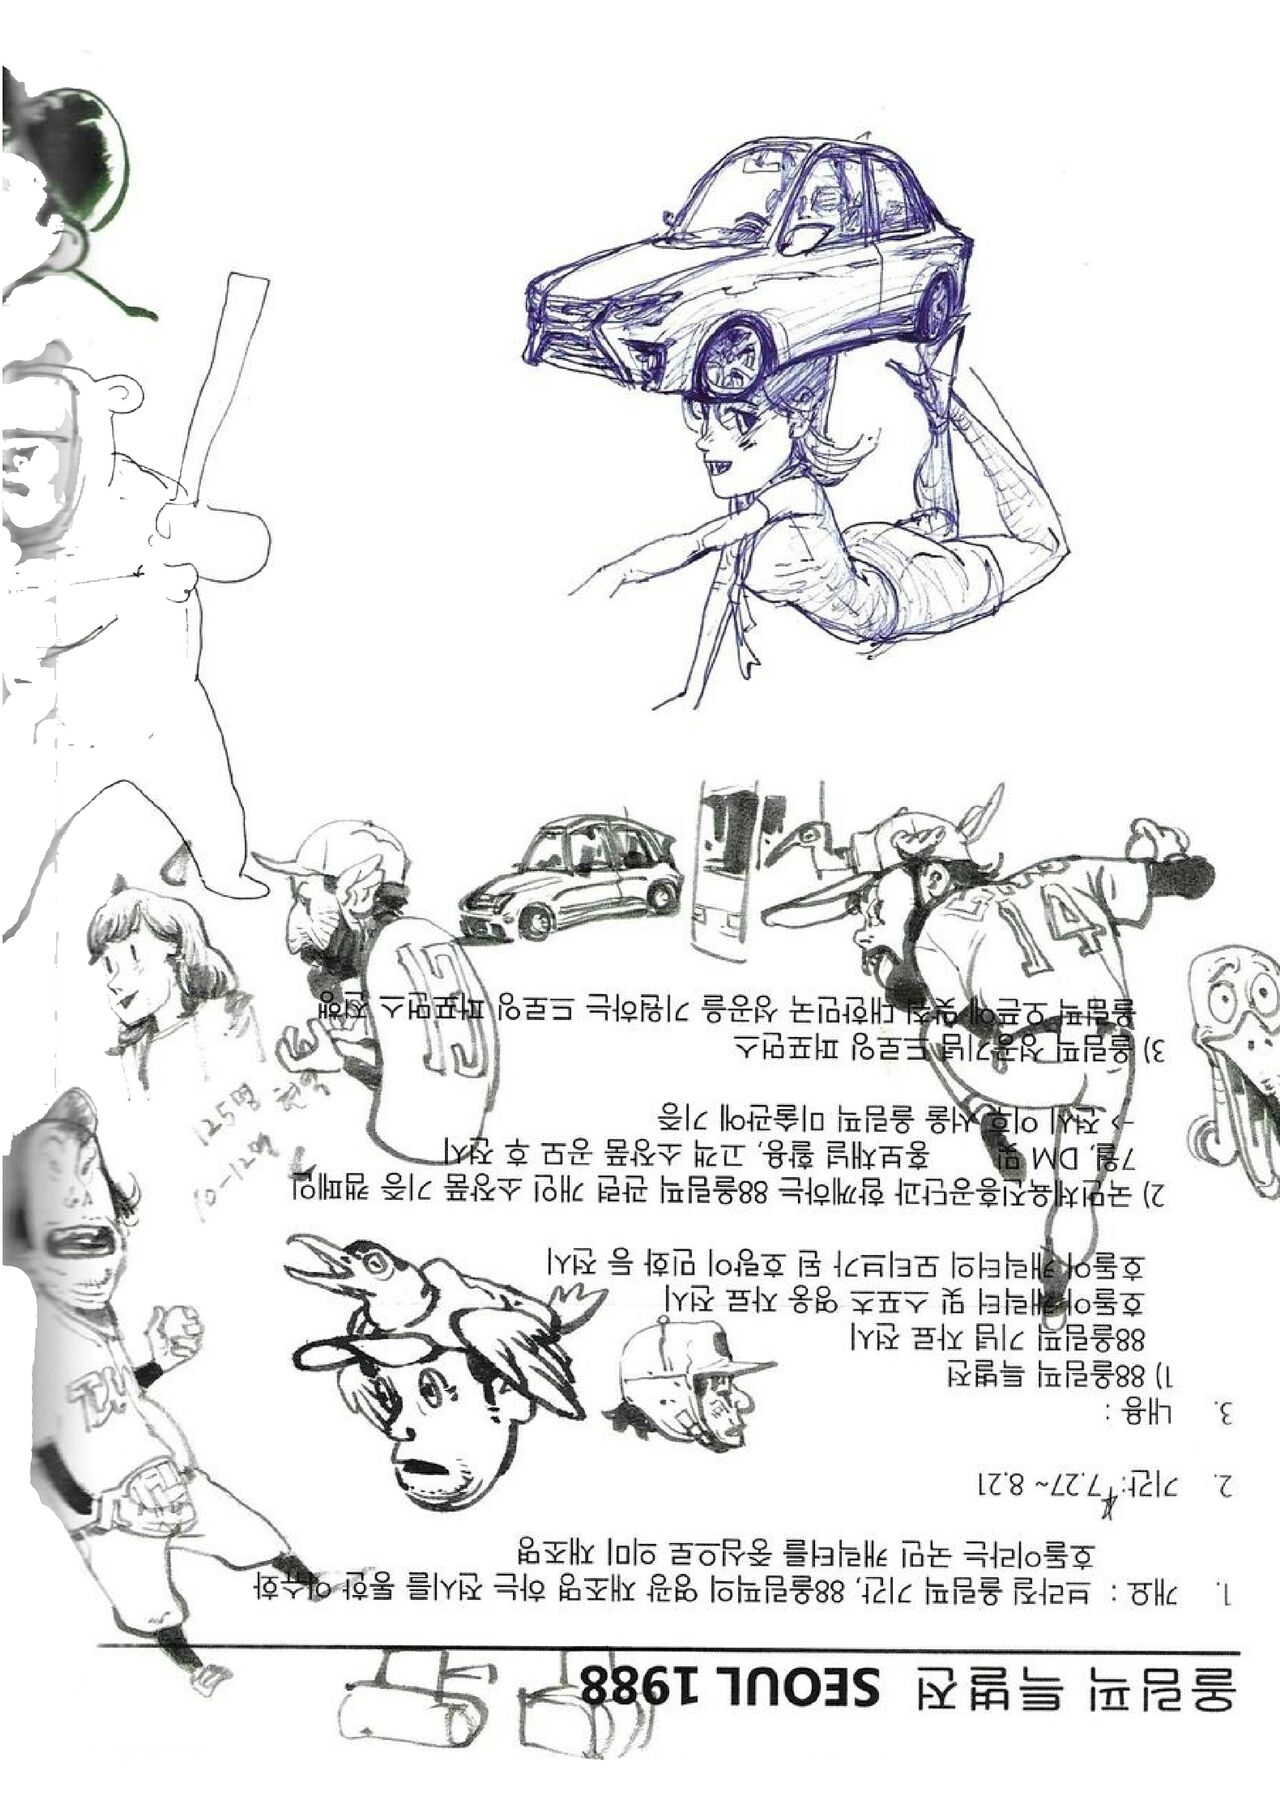 Kim Jung Gi - Sketchbook 2018 (enhanced) 132